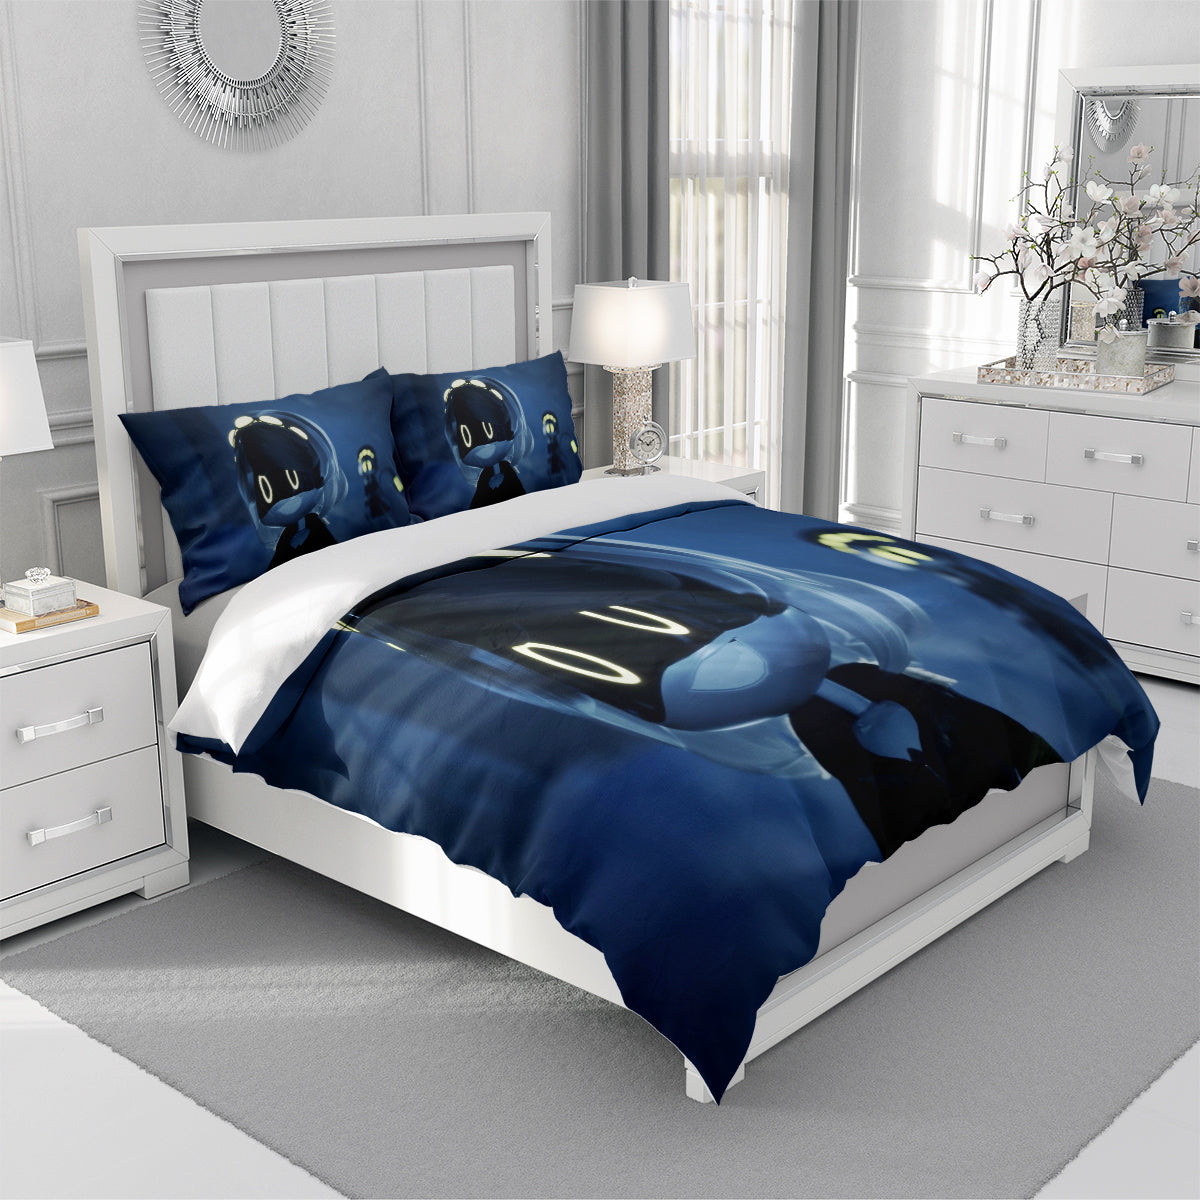 Murder Drones #10 3D Printed Duvet Cover Quilt Cover Pillowcase Bedding Set Bed Linen Home Decor